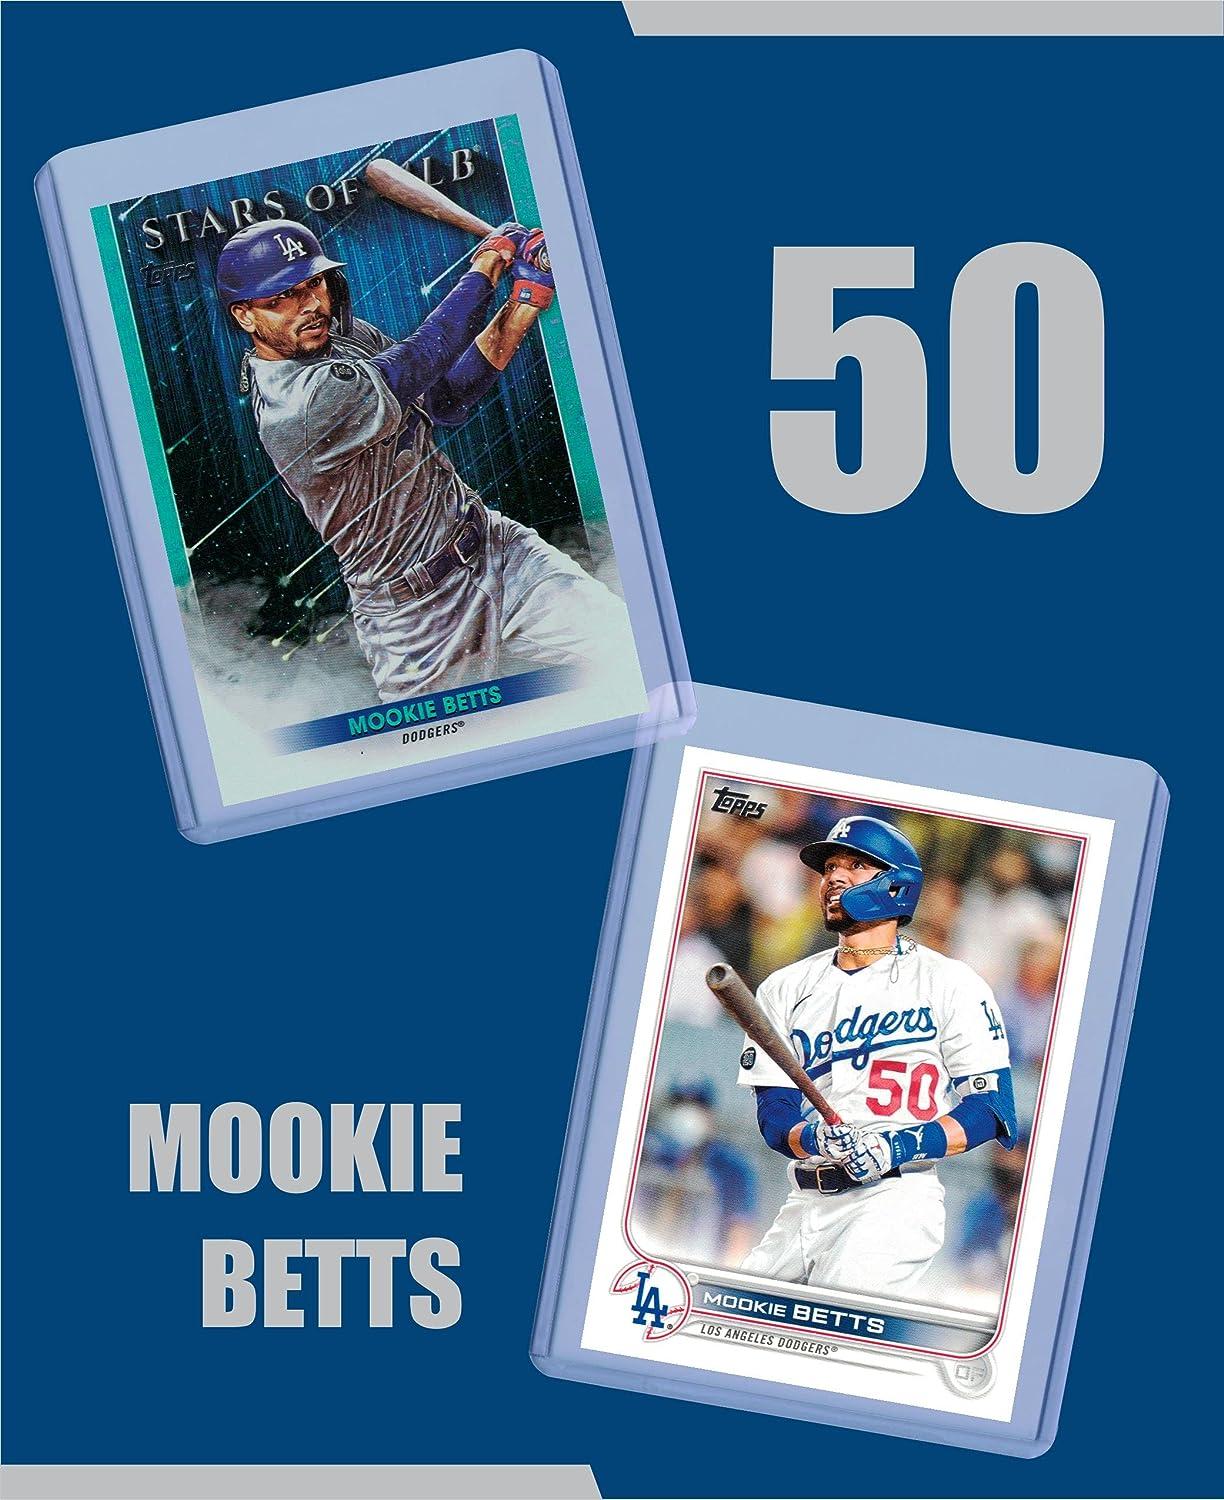 Mookie Betts Baseball Jersey for Babies, Youth, Women, or Men